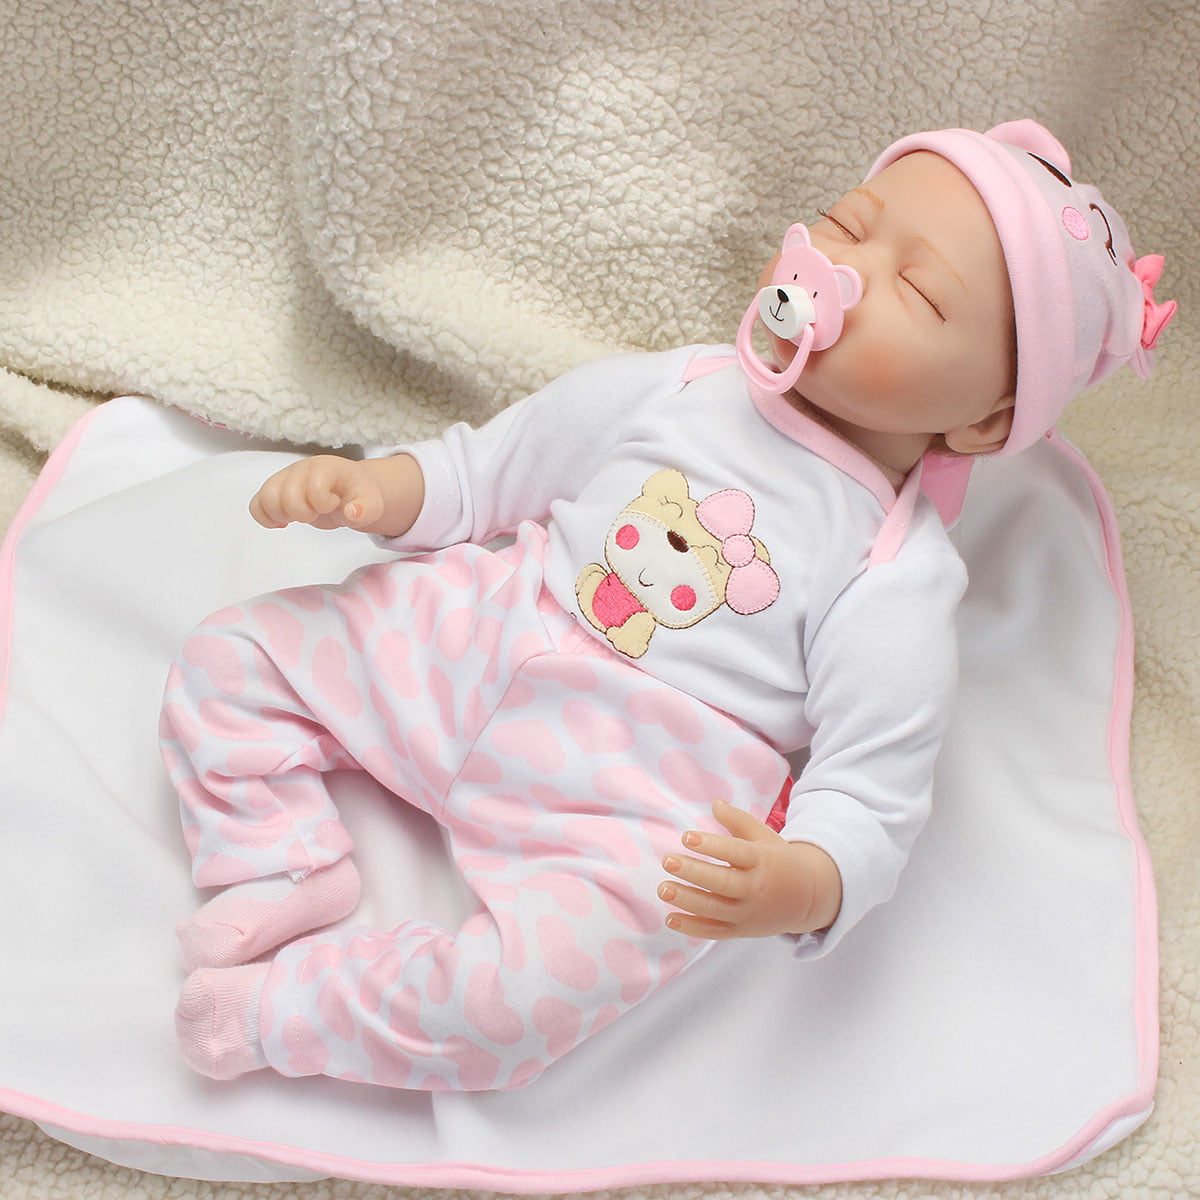 22 Reborn Baby Doll Silicone Vinyl Handmade Lifelike Baby Sleeping